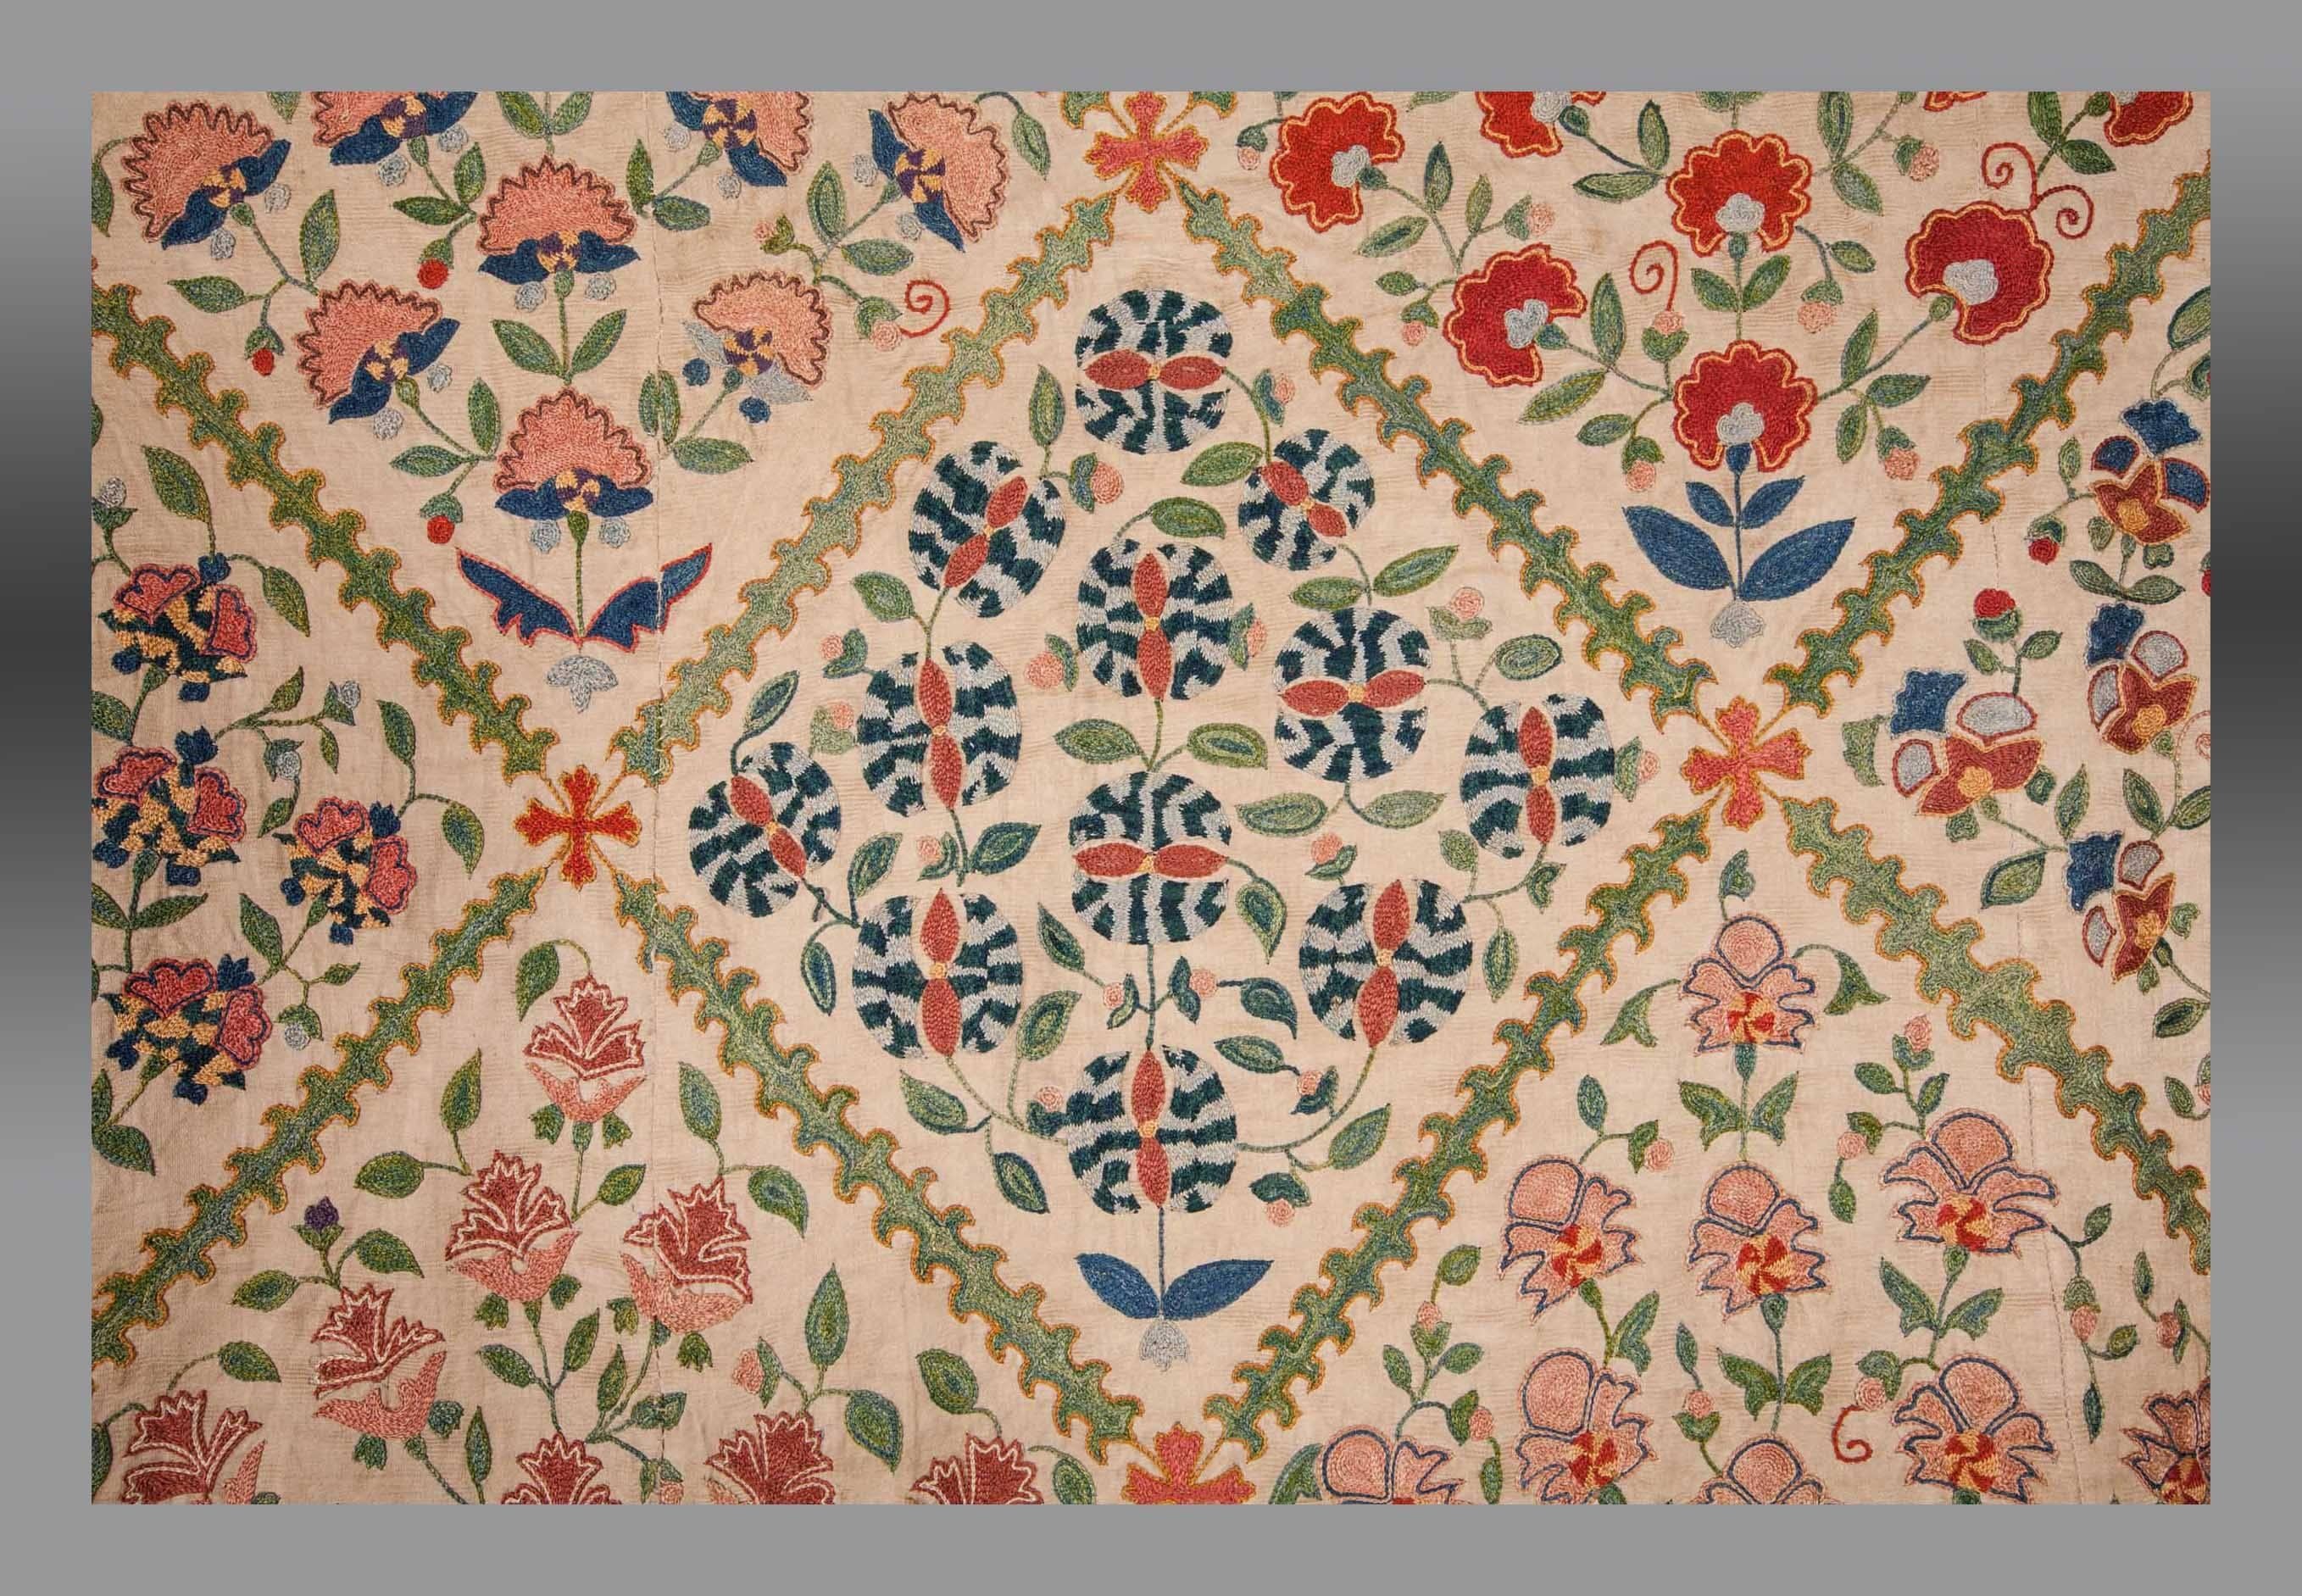 Contemporary Uzbek Silk Embroidery, Central Asia For Sale 1